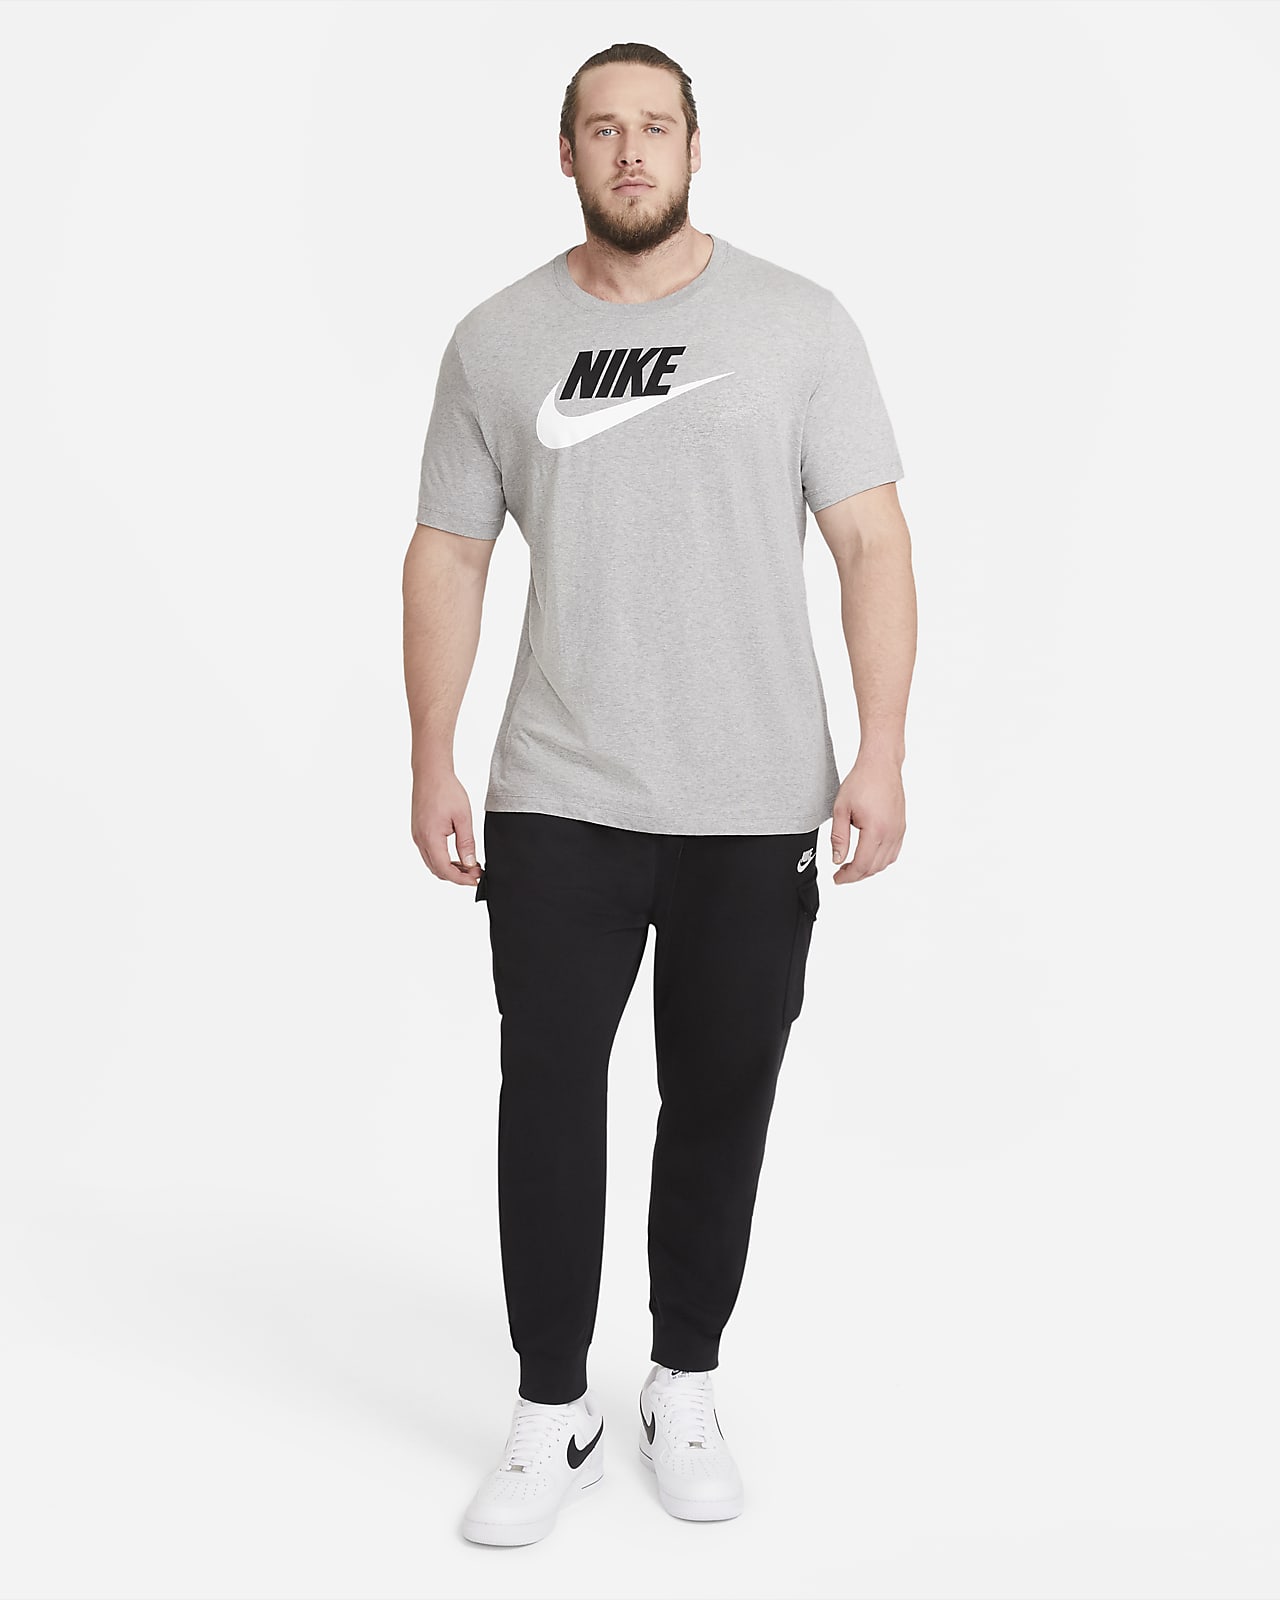 Hommes Gris Hauts et tee-shirts. Nike LU